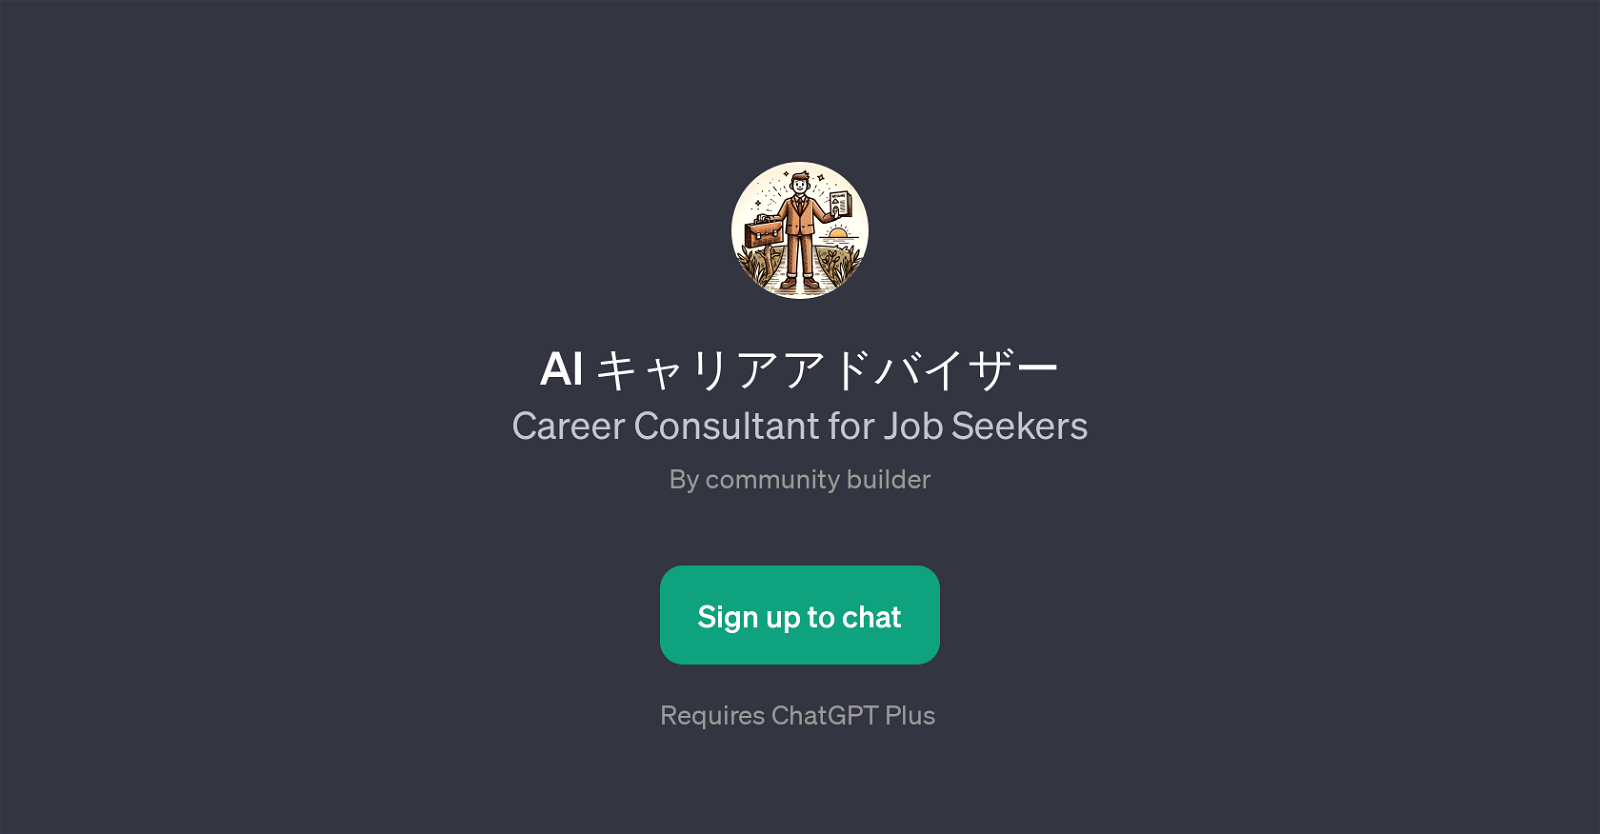 AI Career Advisor website